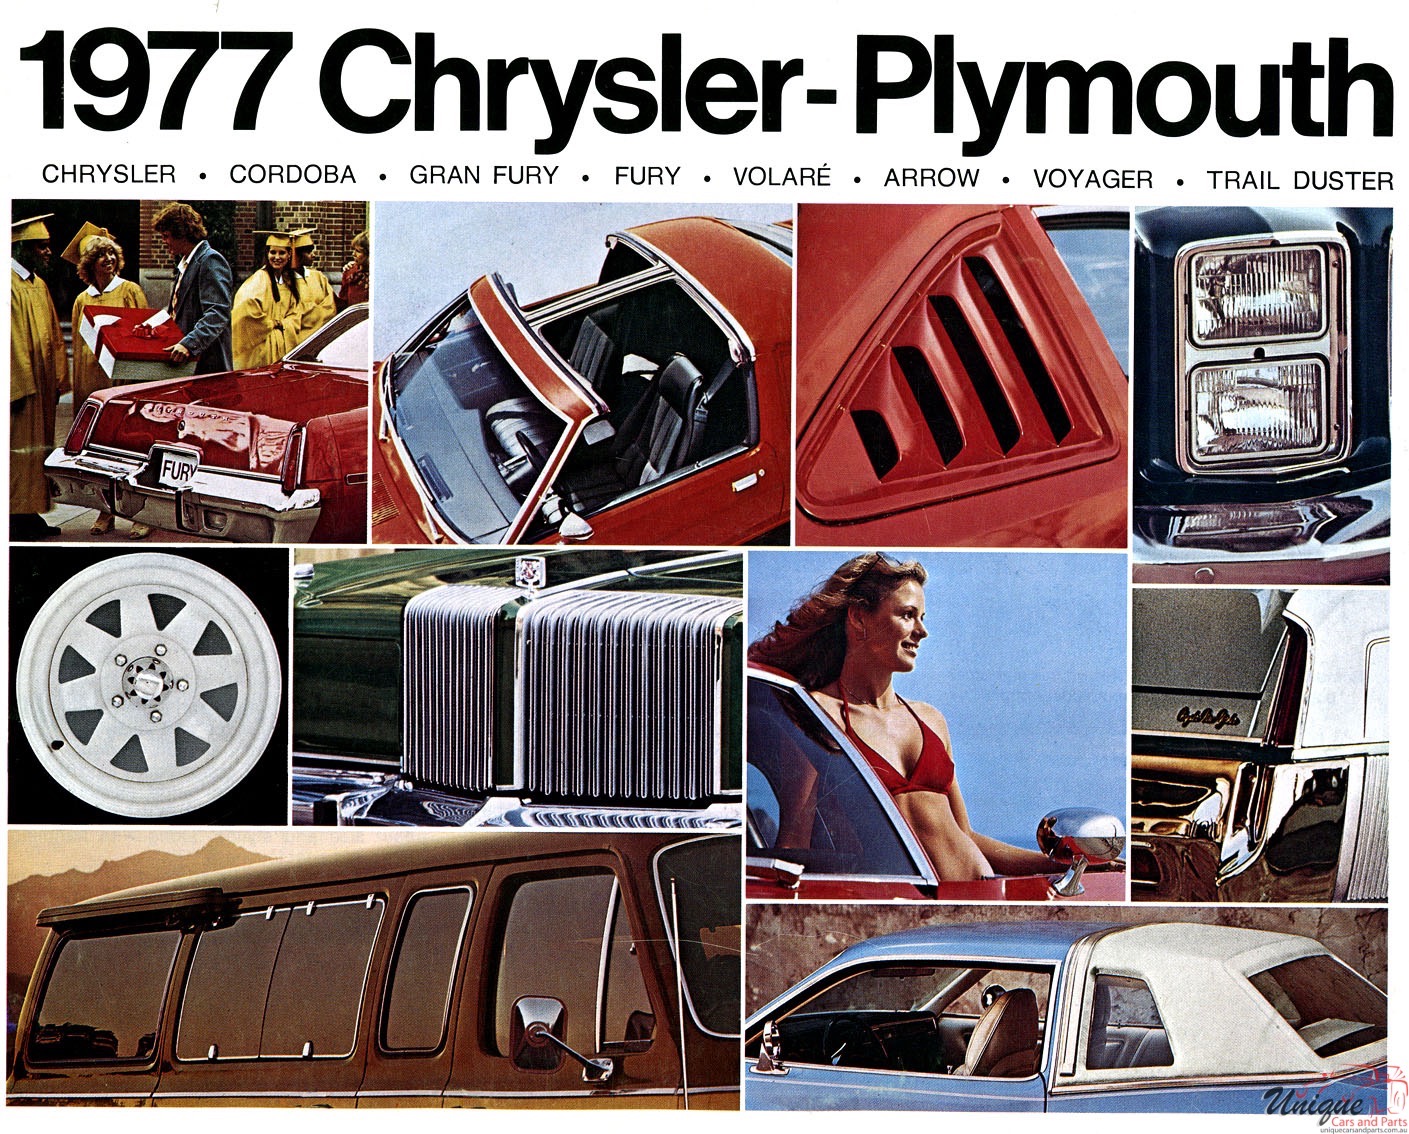 1977 Chrysler-Plymouth Brochure